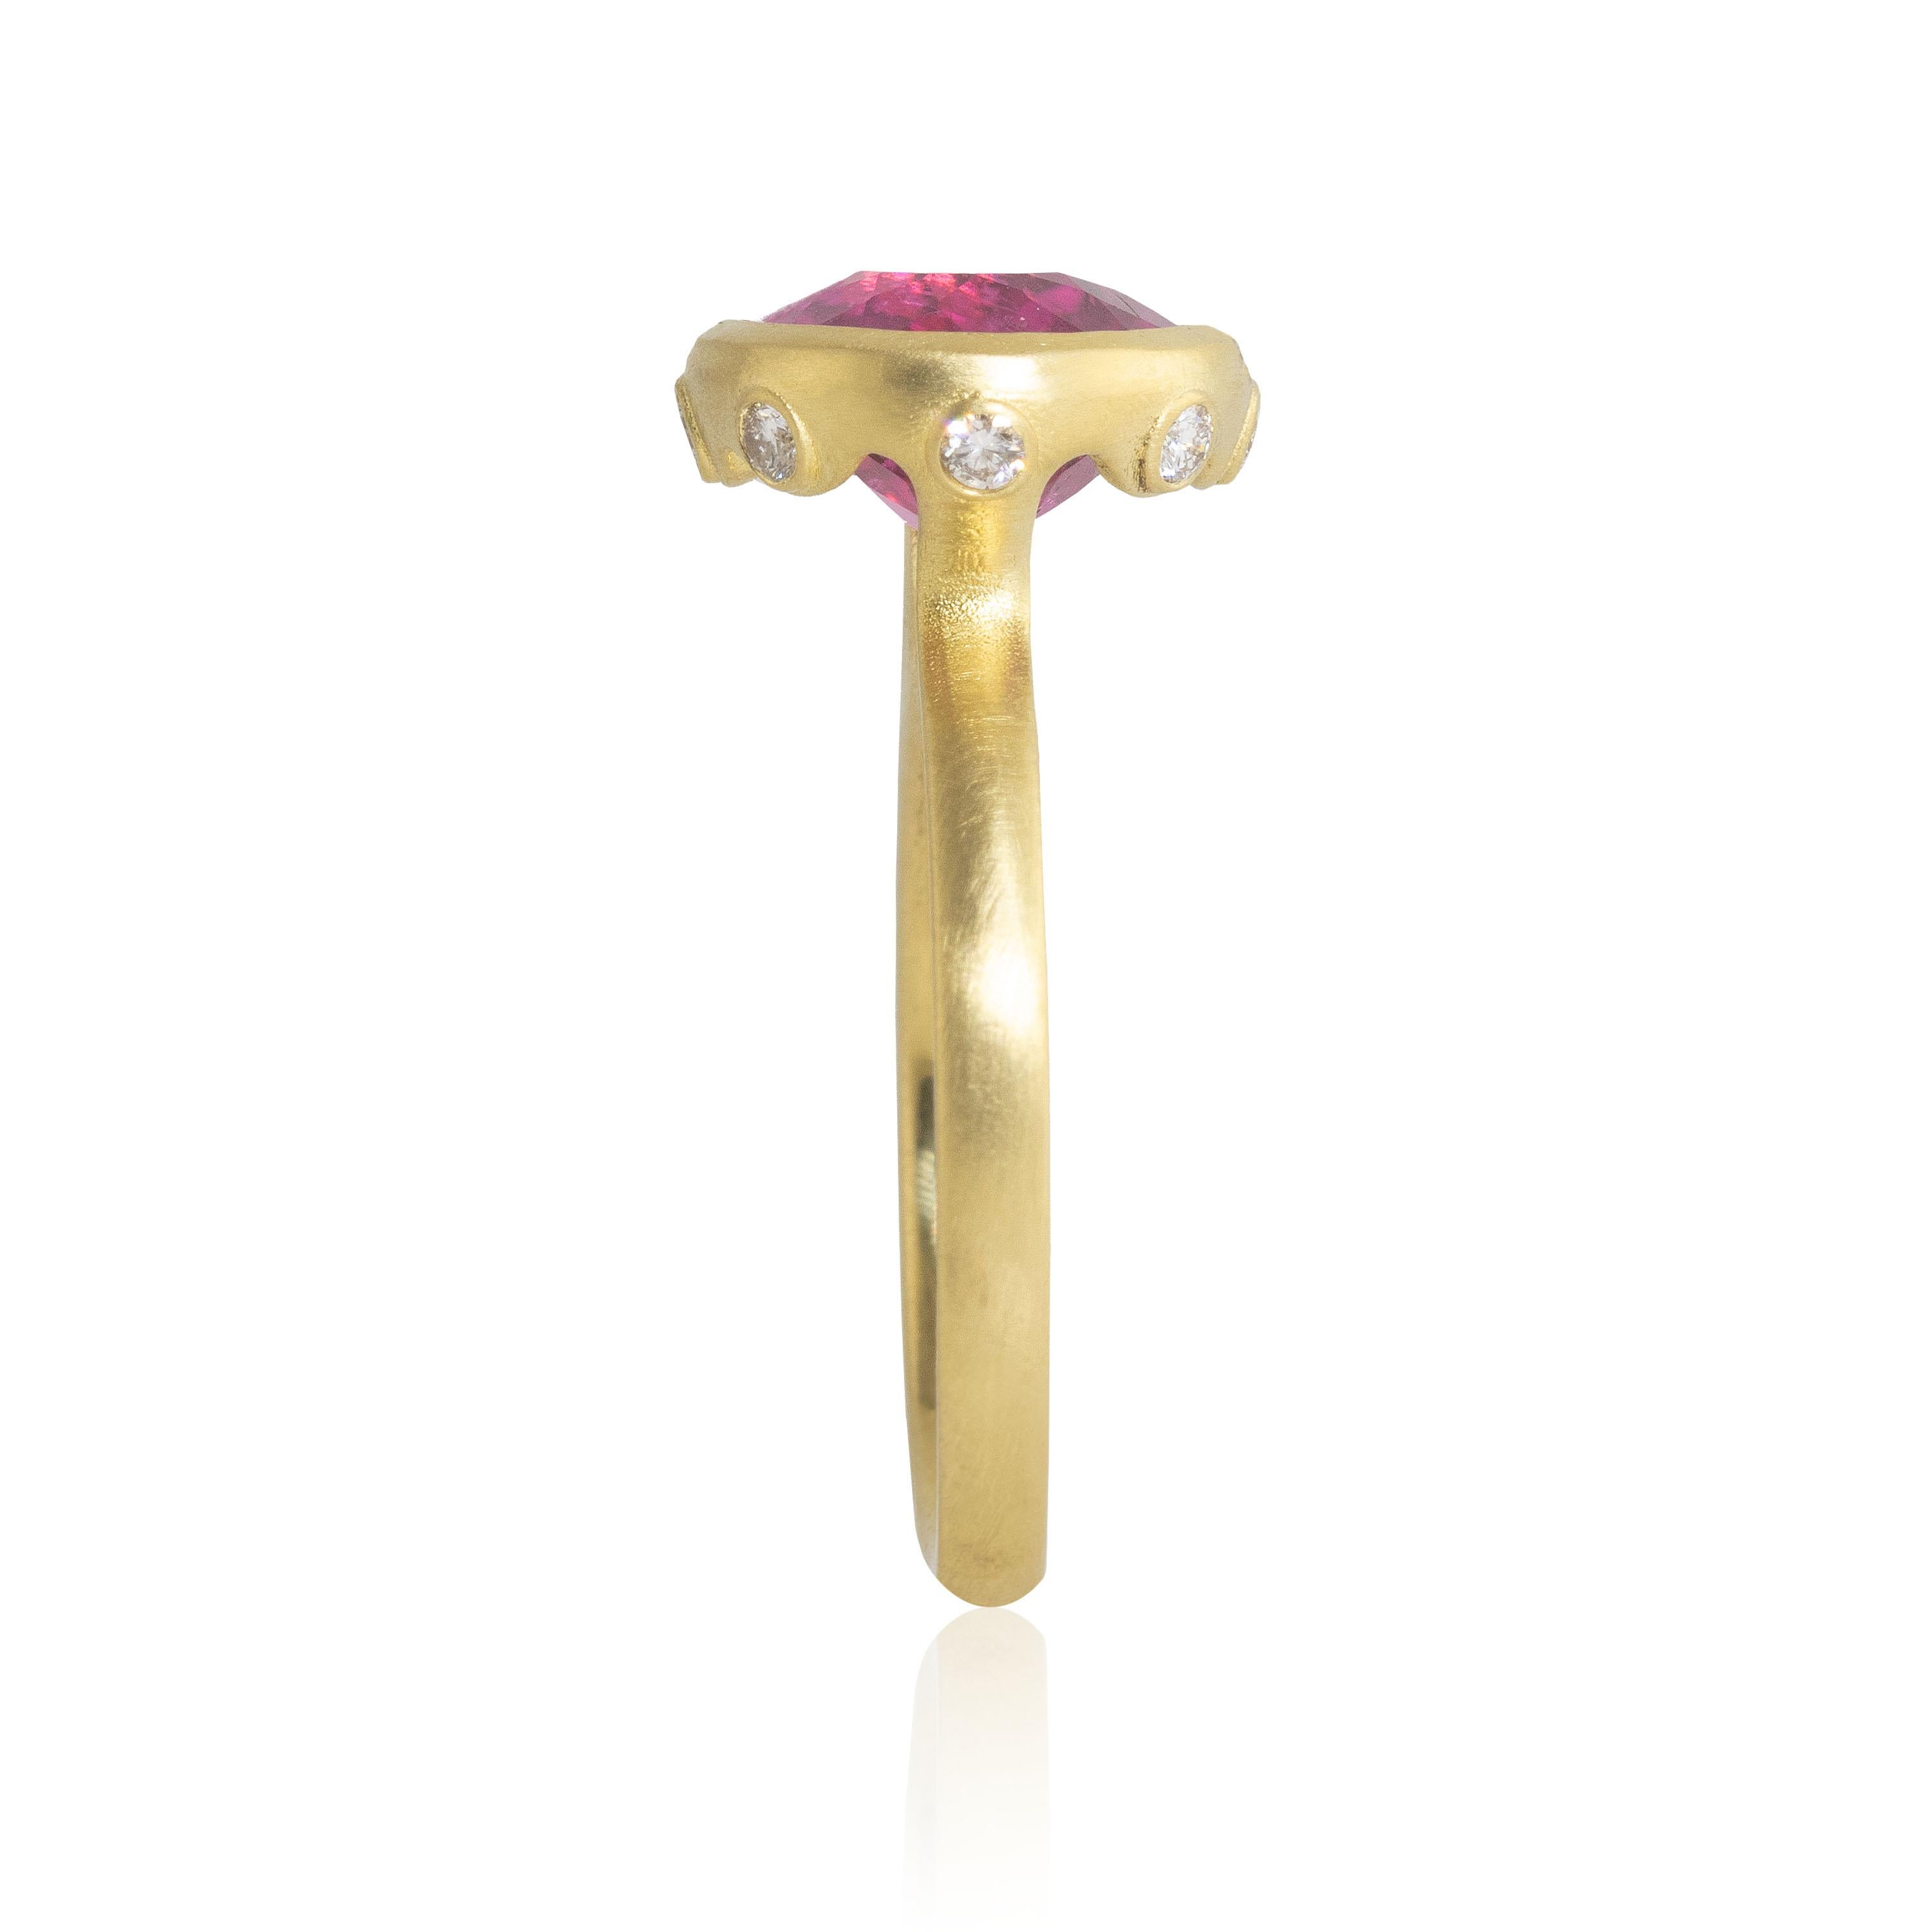 Oval Cut Ico & the Bird Fine Jewelry 3.84 carat Rubellite Tourmaline Diamond Gold Ring For Sale